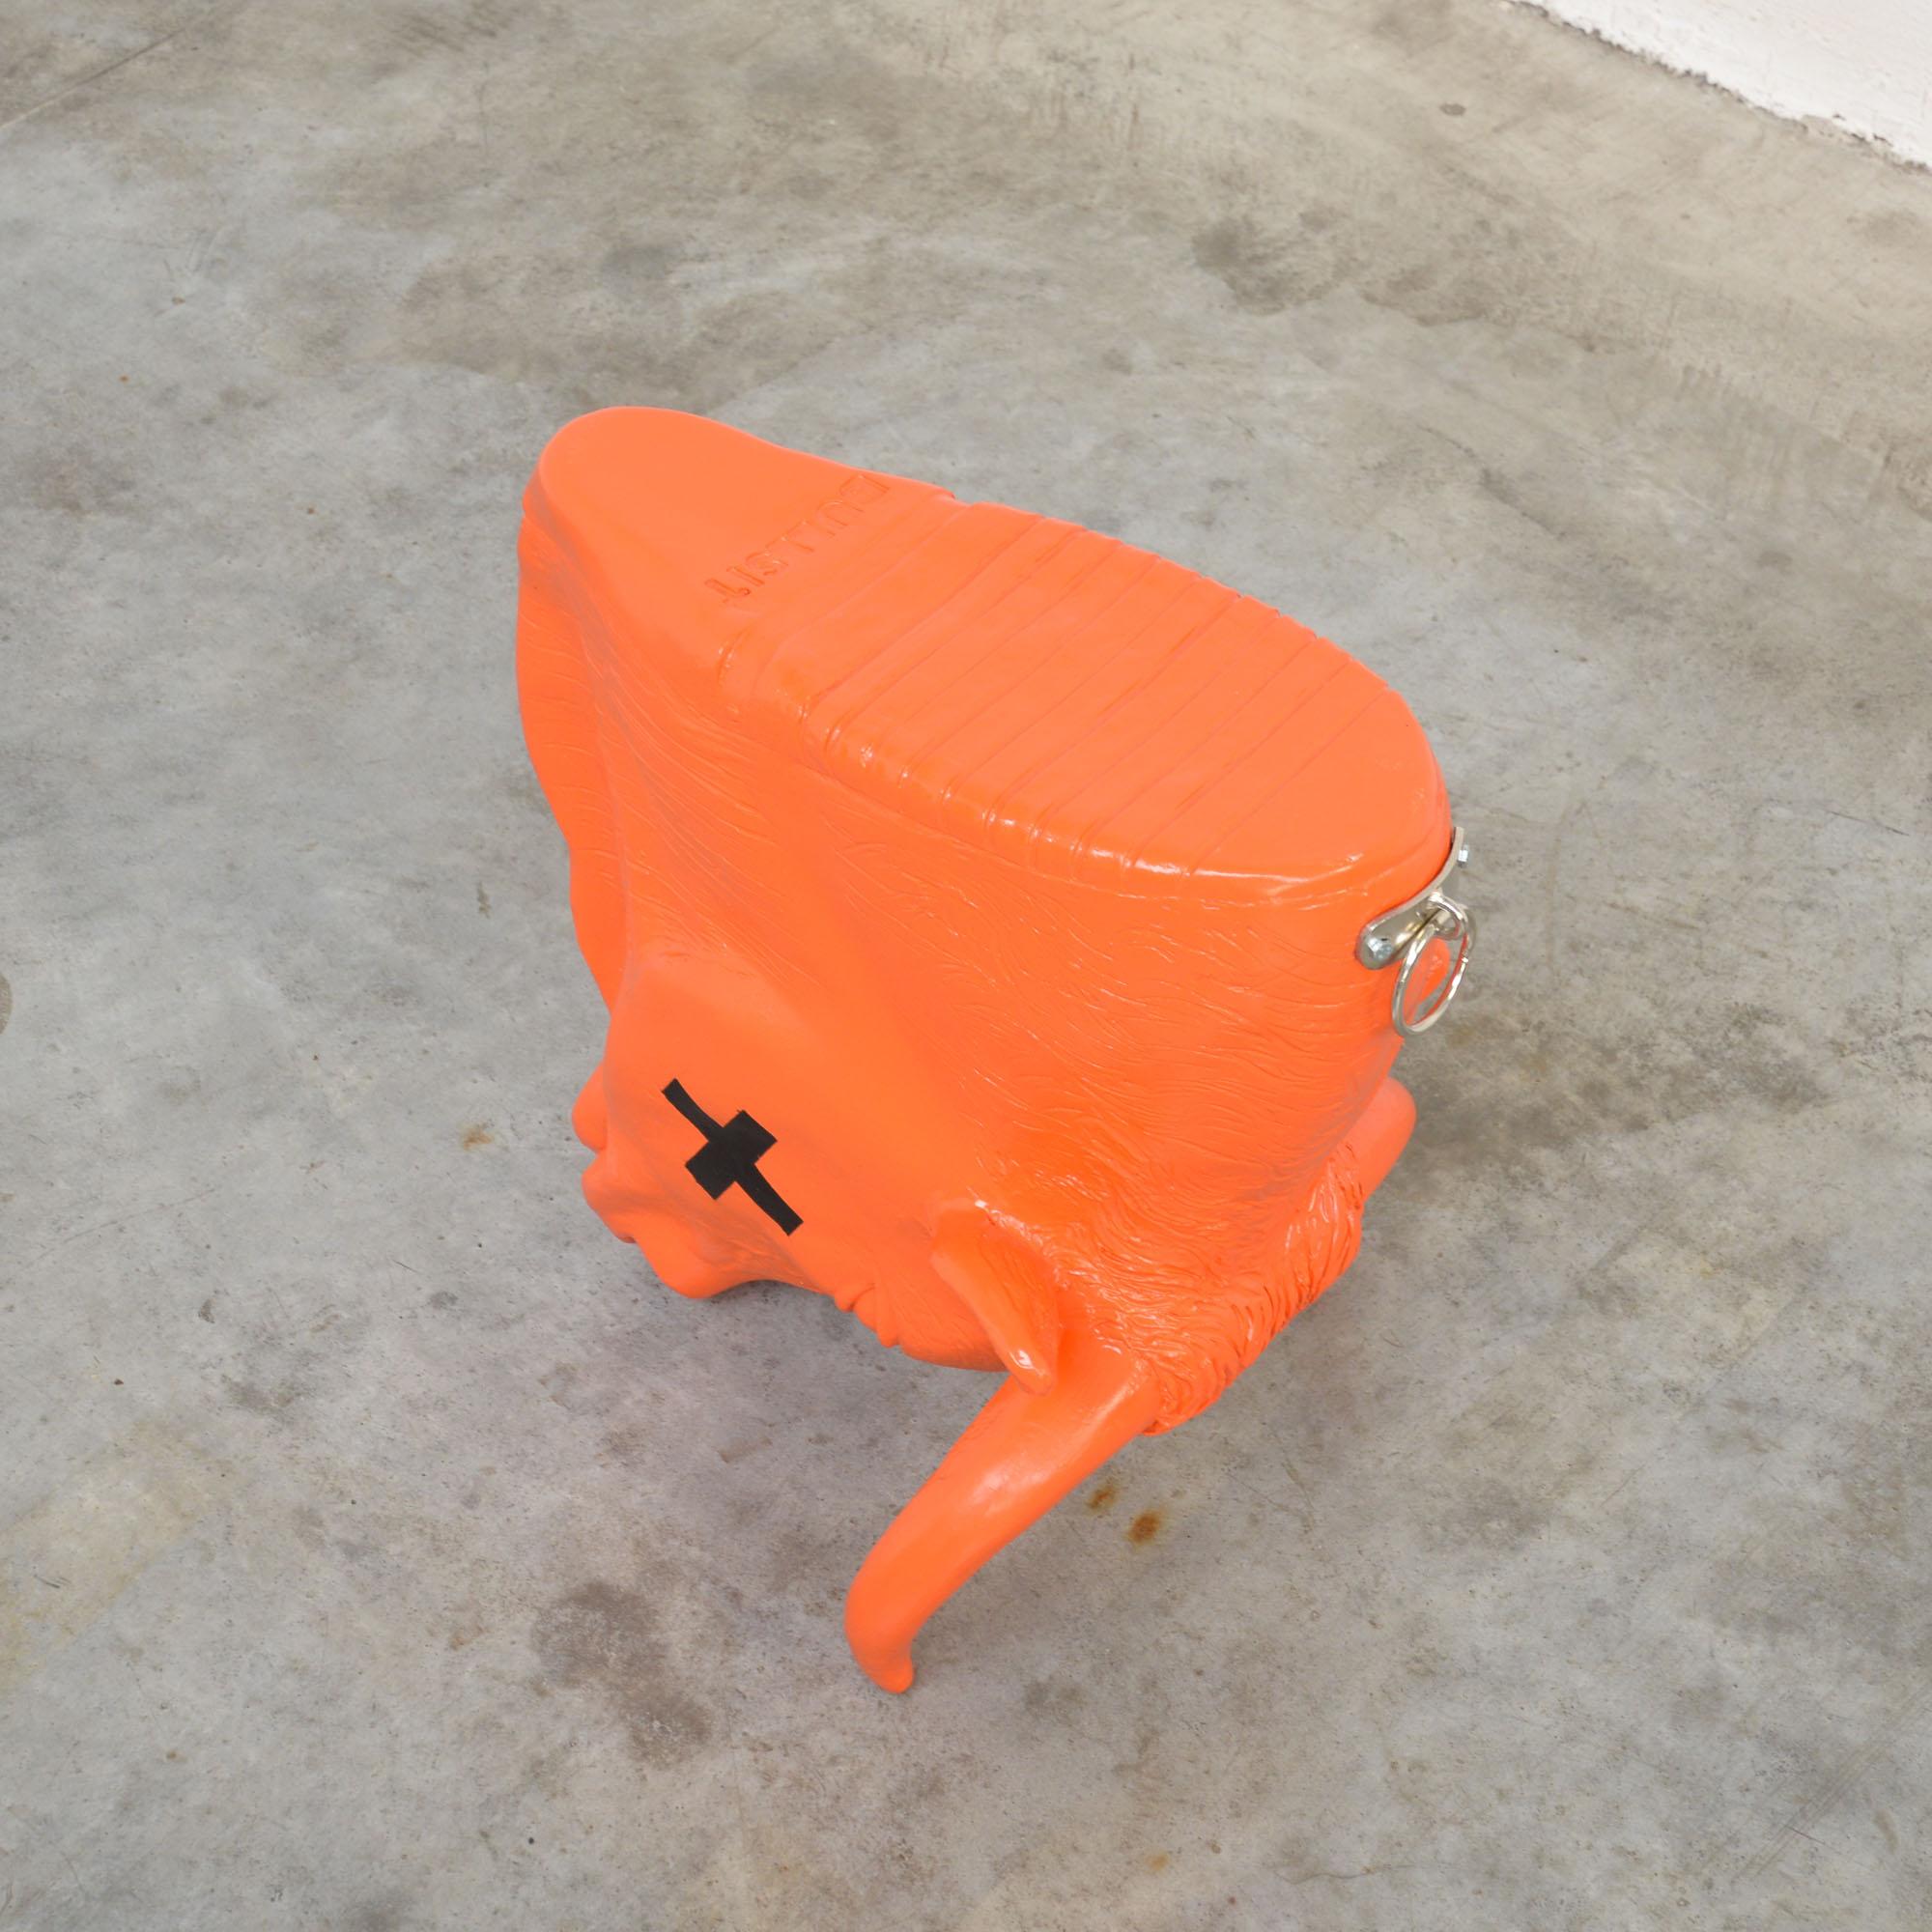 Contemporary Orange Bullsit by Hans Weyers, 2019